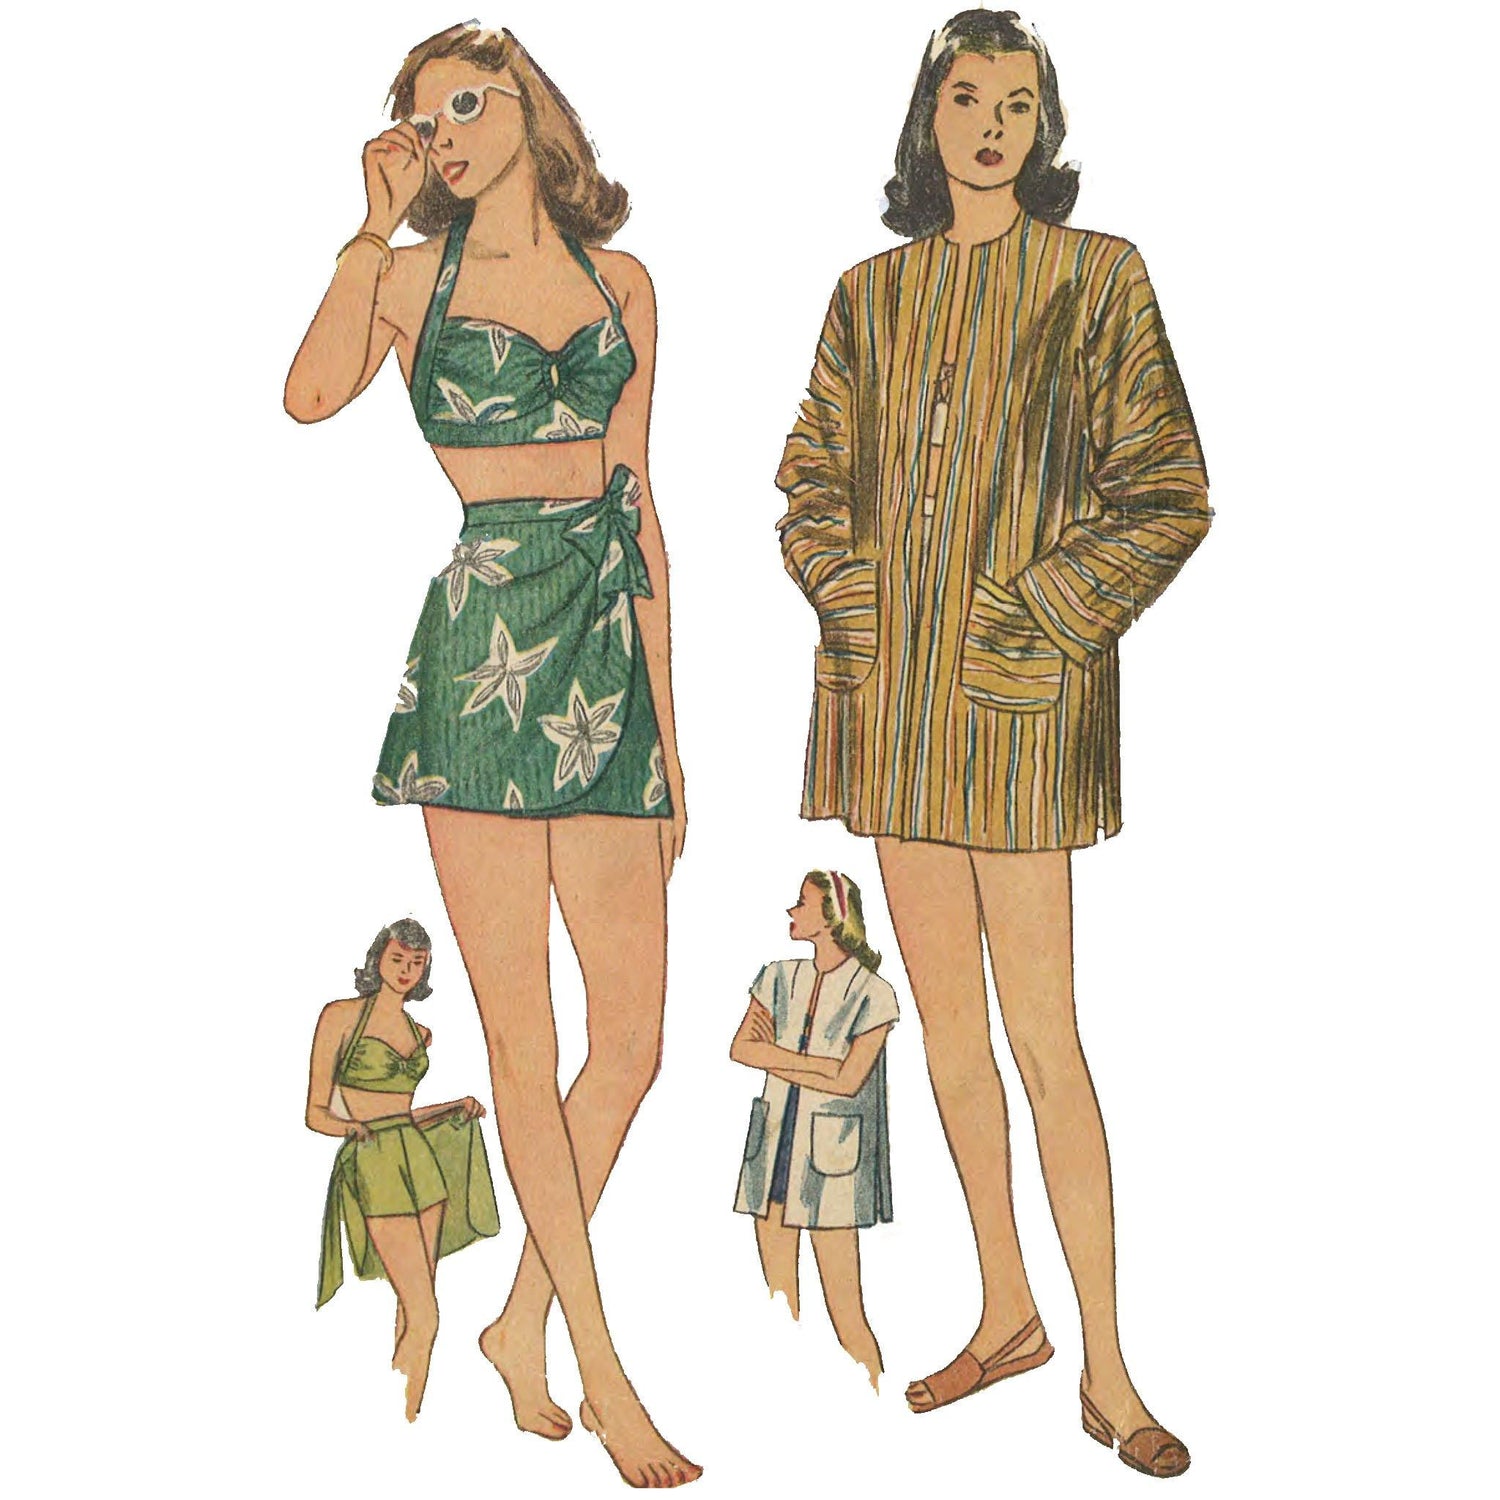 Women wearing sarong and beach coat